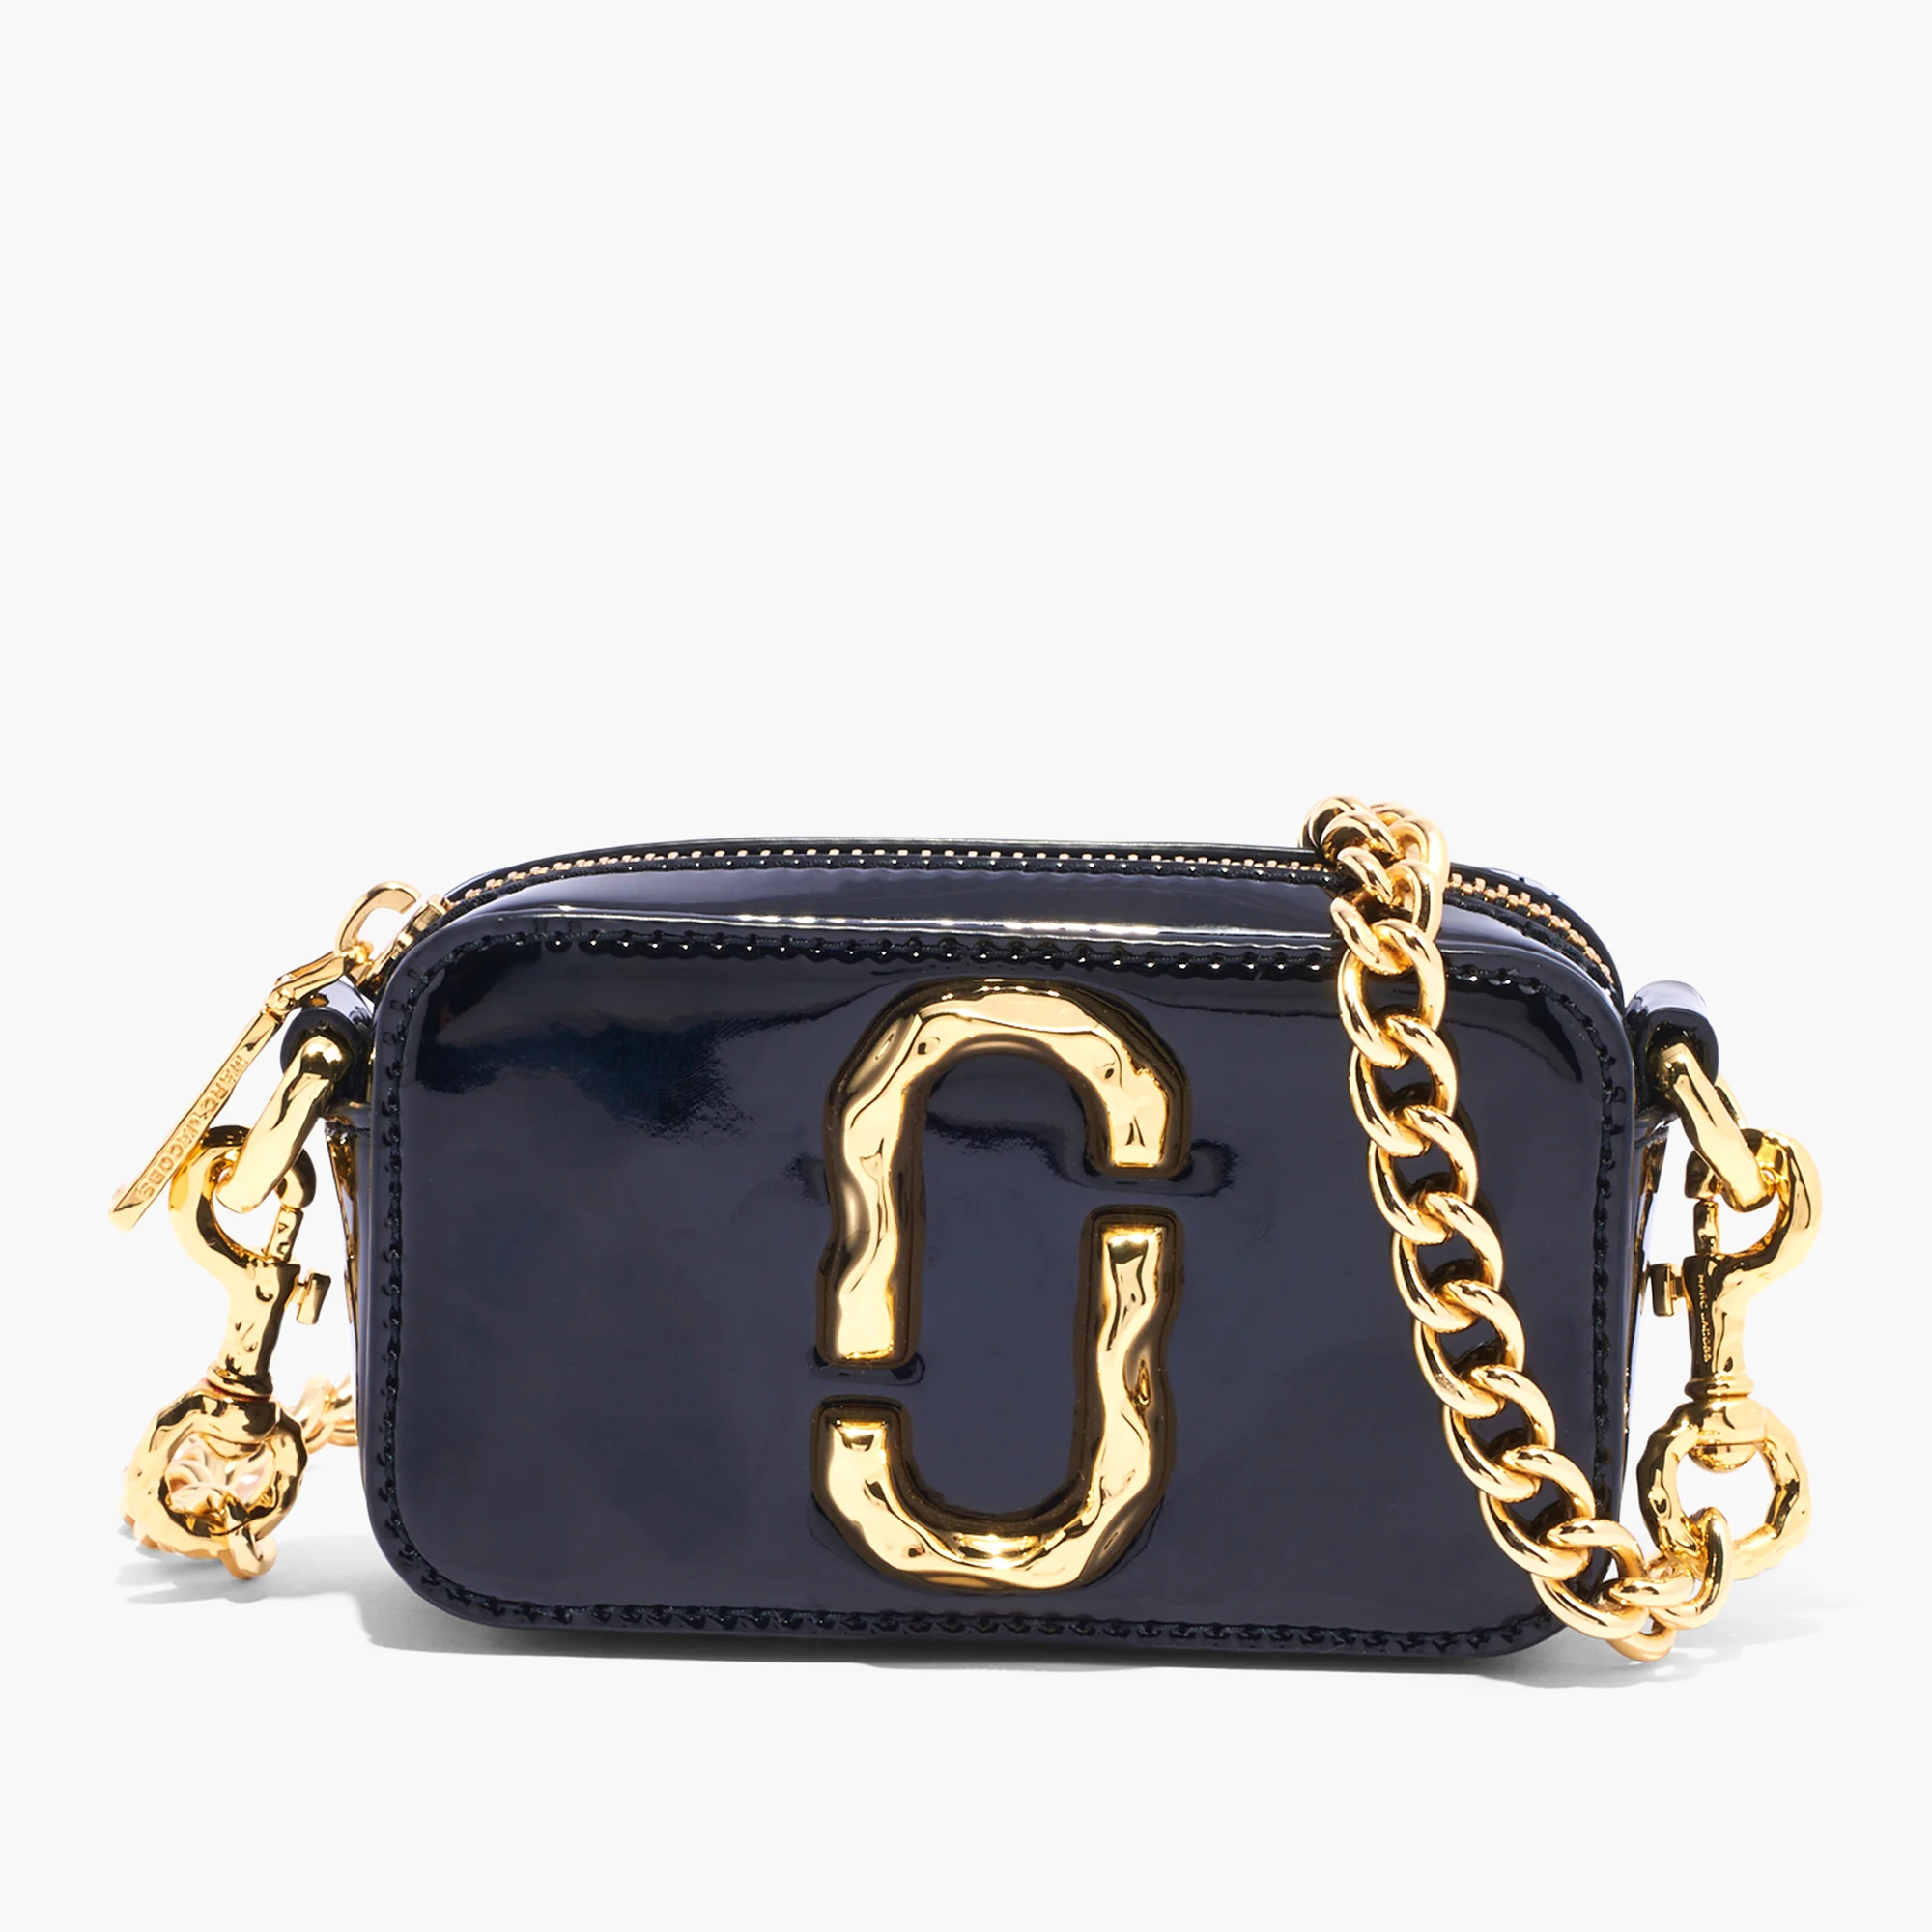 Marc Jacobs Women's Mini Snapshot Glossy Bag - Black Image 1